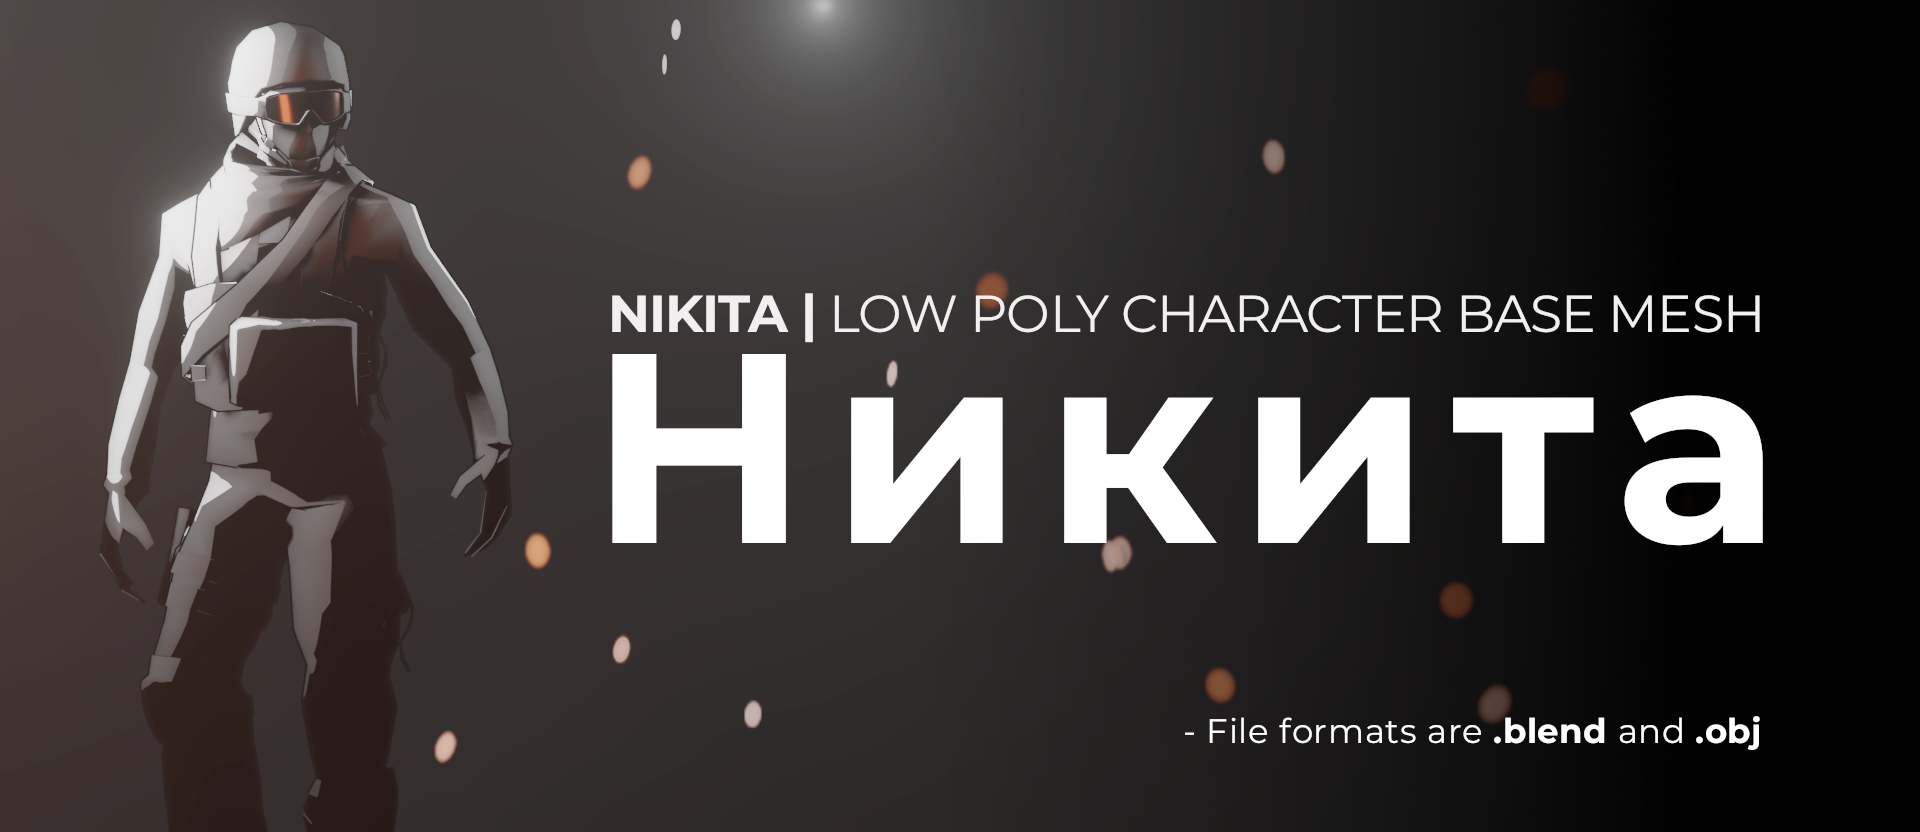 Nikita | Low poly character base mesh